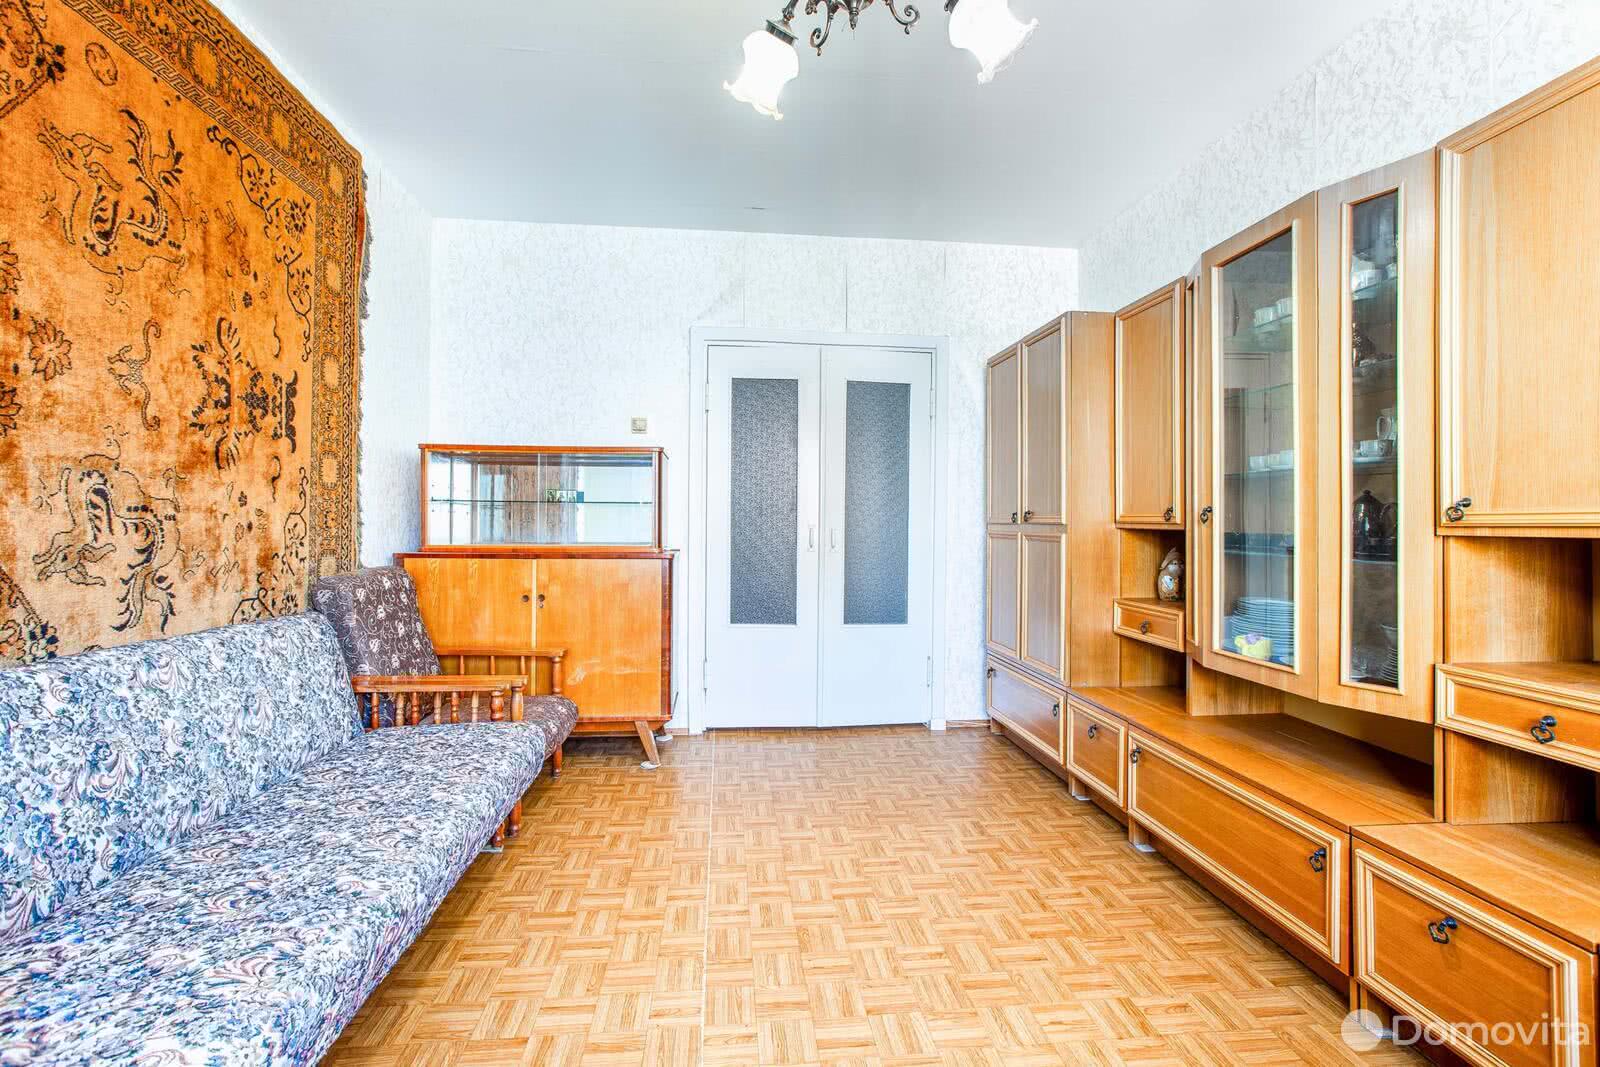 квартира, Минск, ул. Шаранговича, д. 49/2, стоимость продажи 212 160 р.